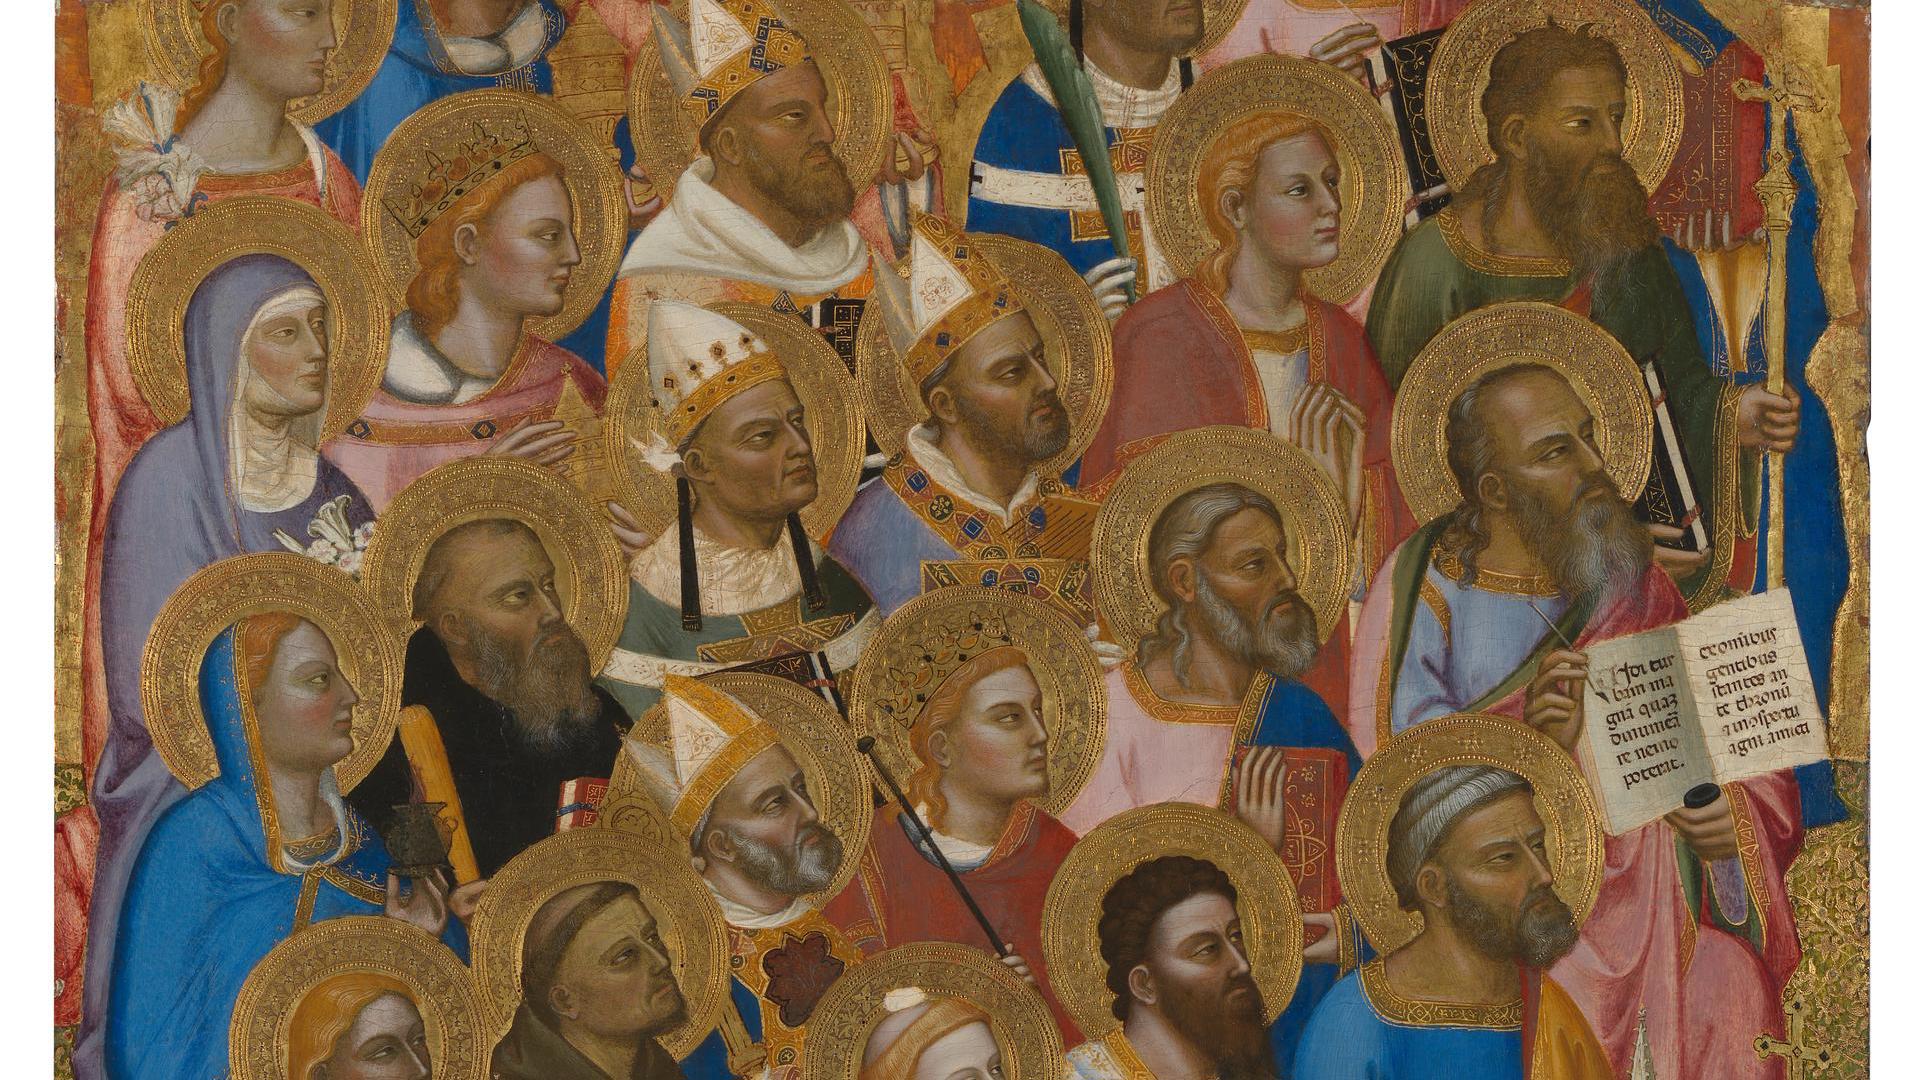 Adoring Saints: Left Main Tier Panel by Jacopo di Cione and workshop